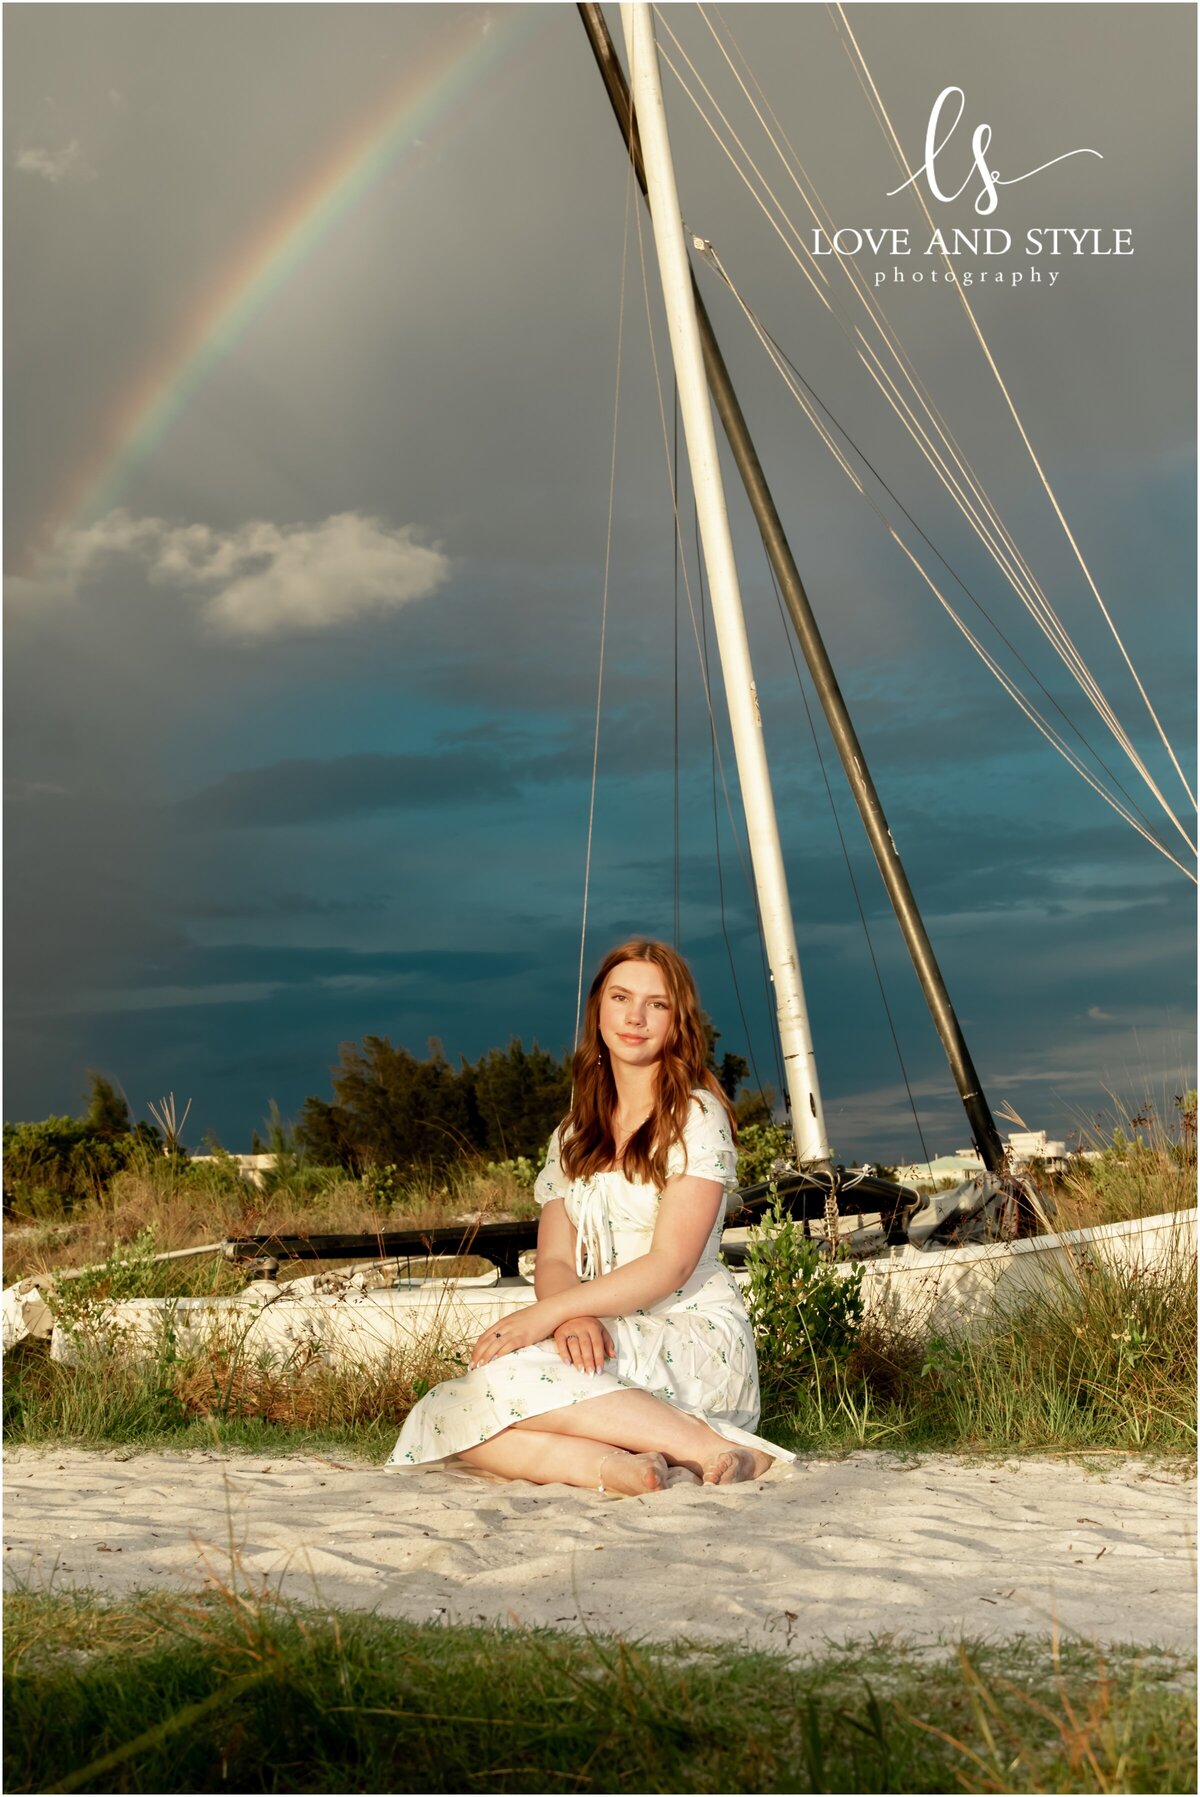 High school senior photo at Siesta Key beach with mini catamaran and rainbow behind her